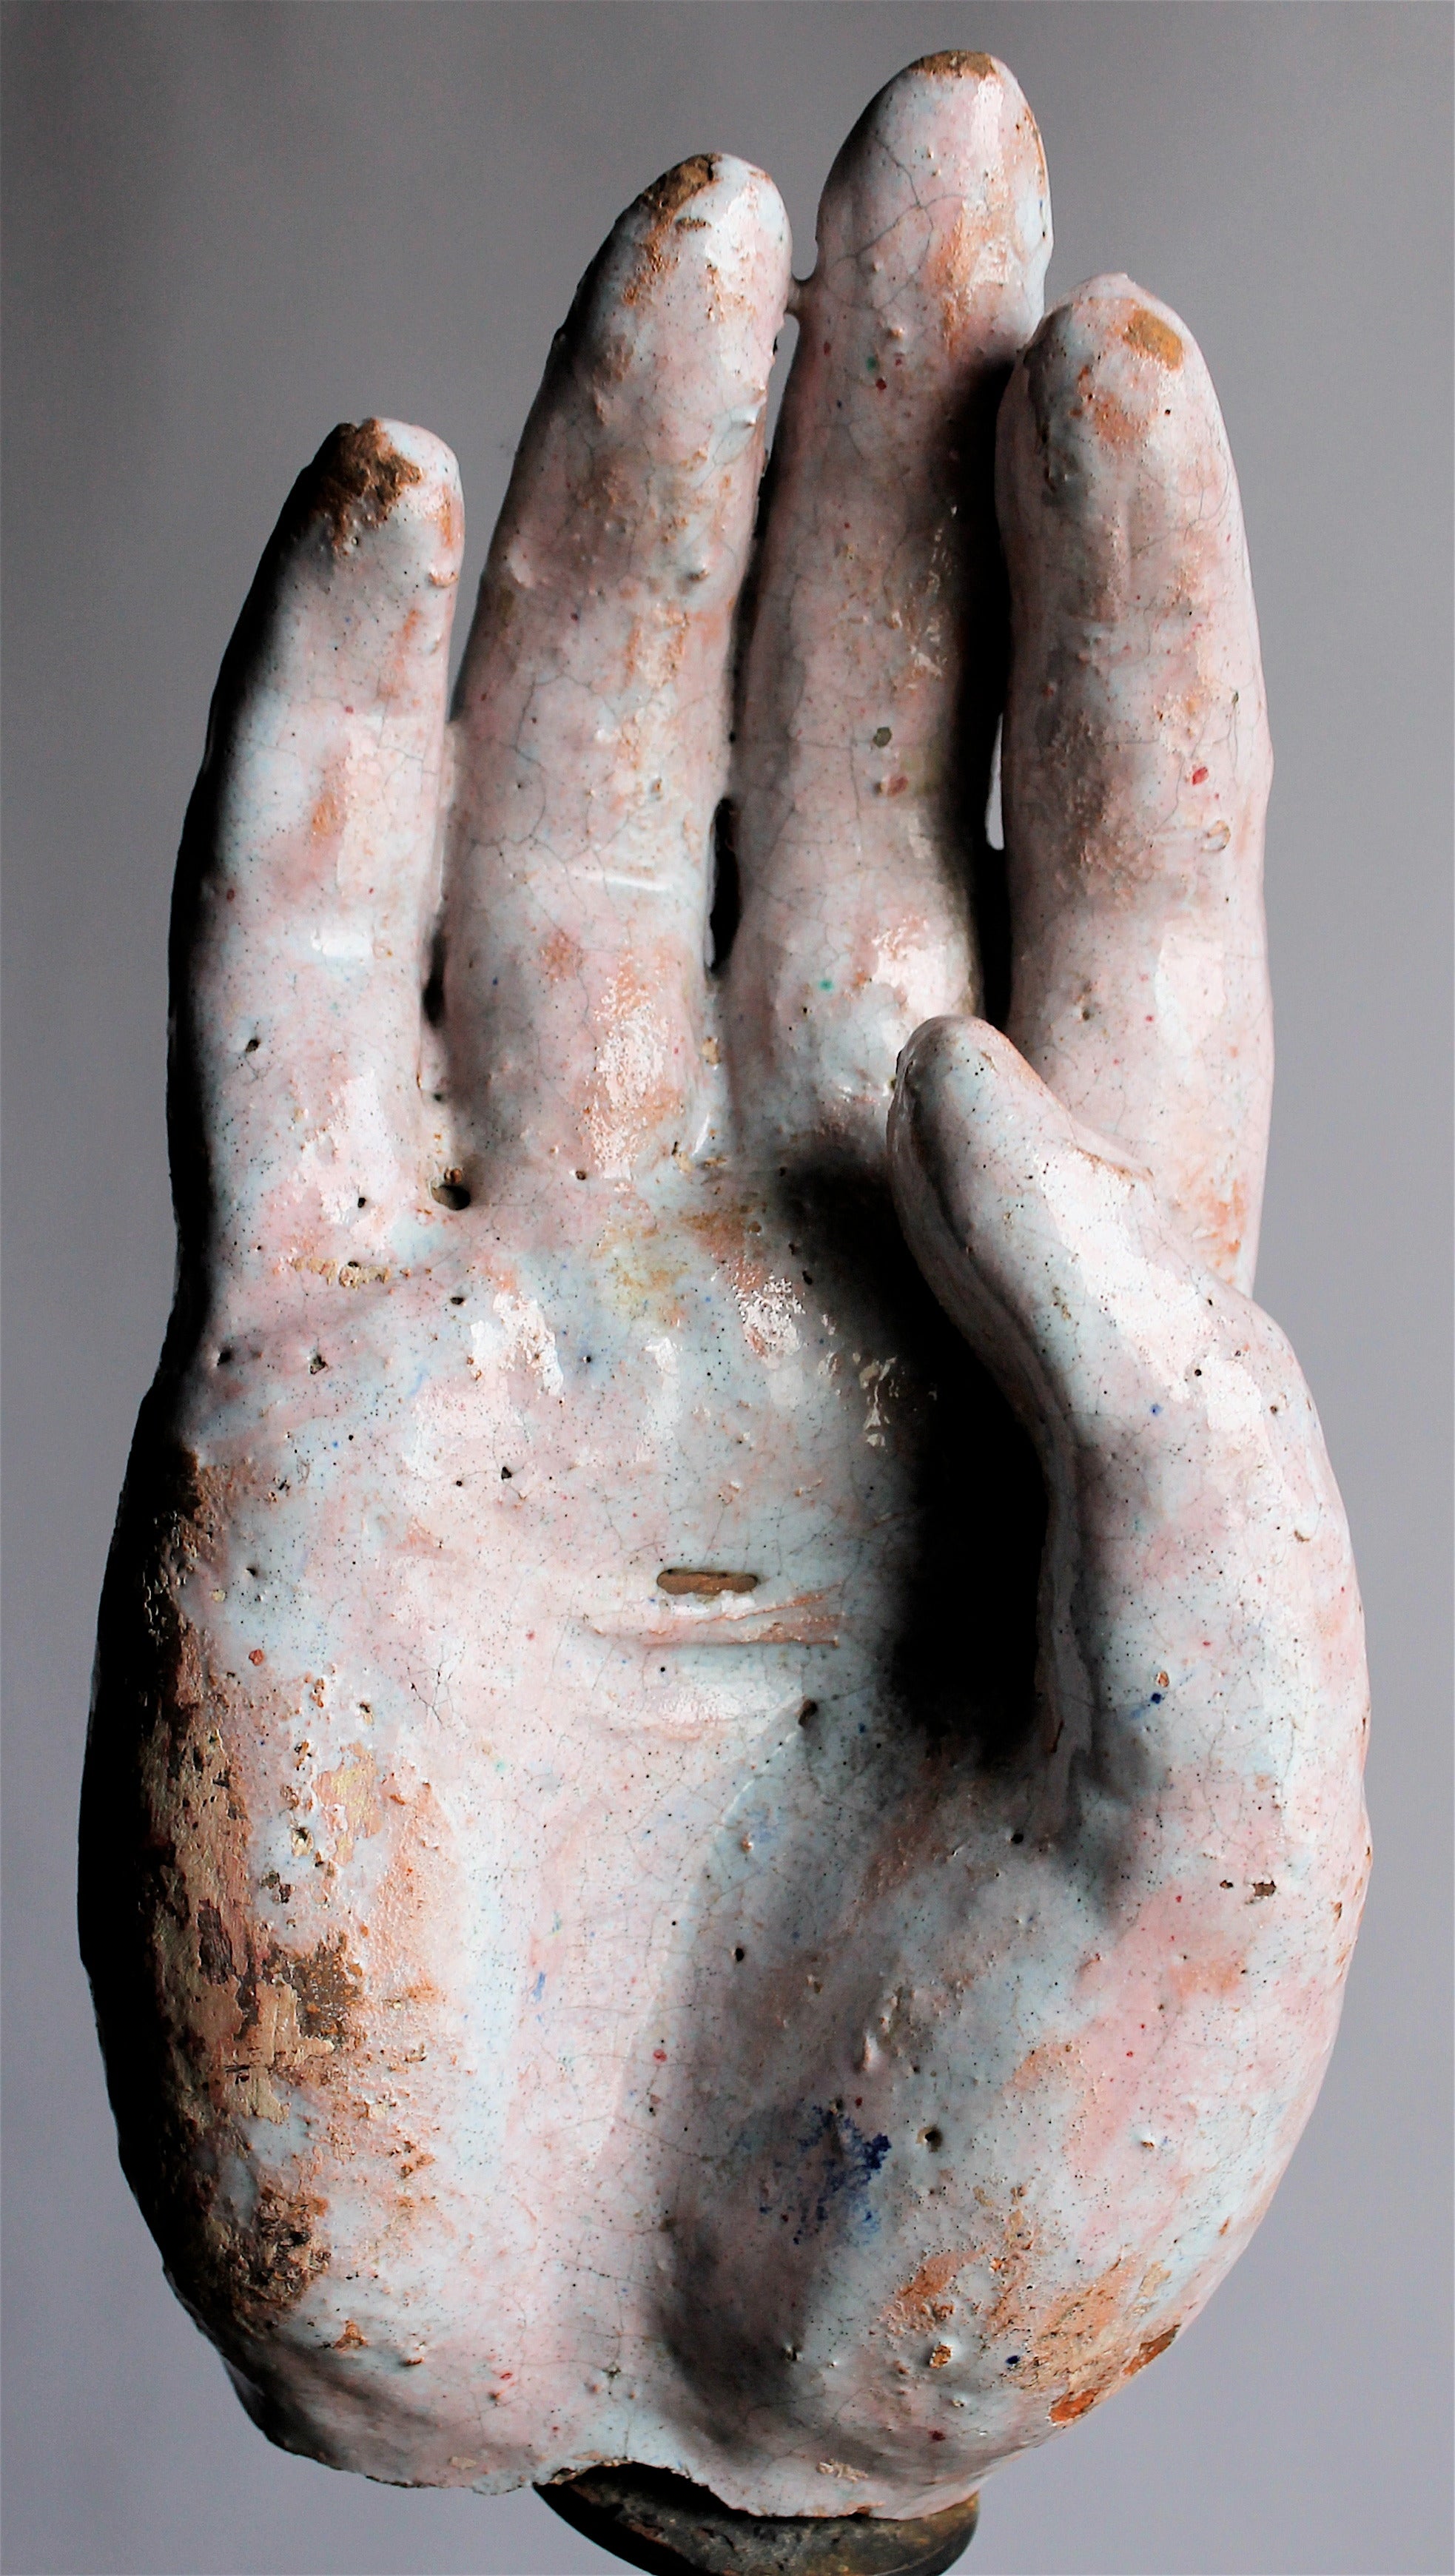 Vally Wieselthier Ceramic Hand Fragment from the Wiener Werkstatte showroom NYC